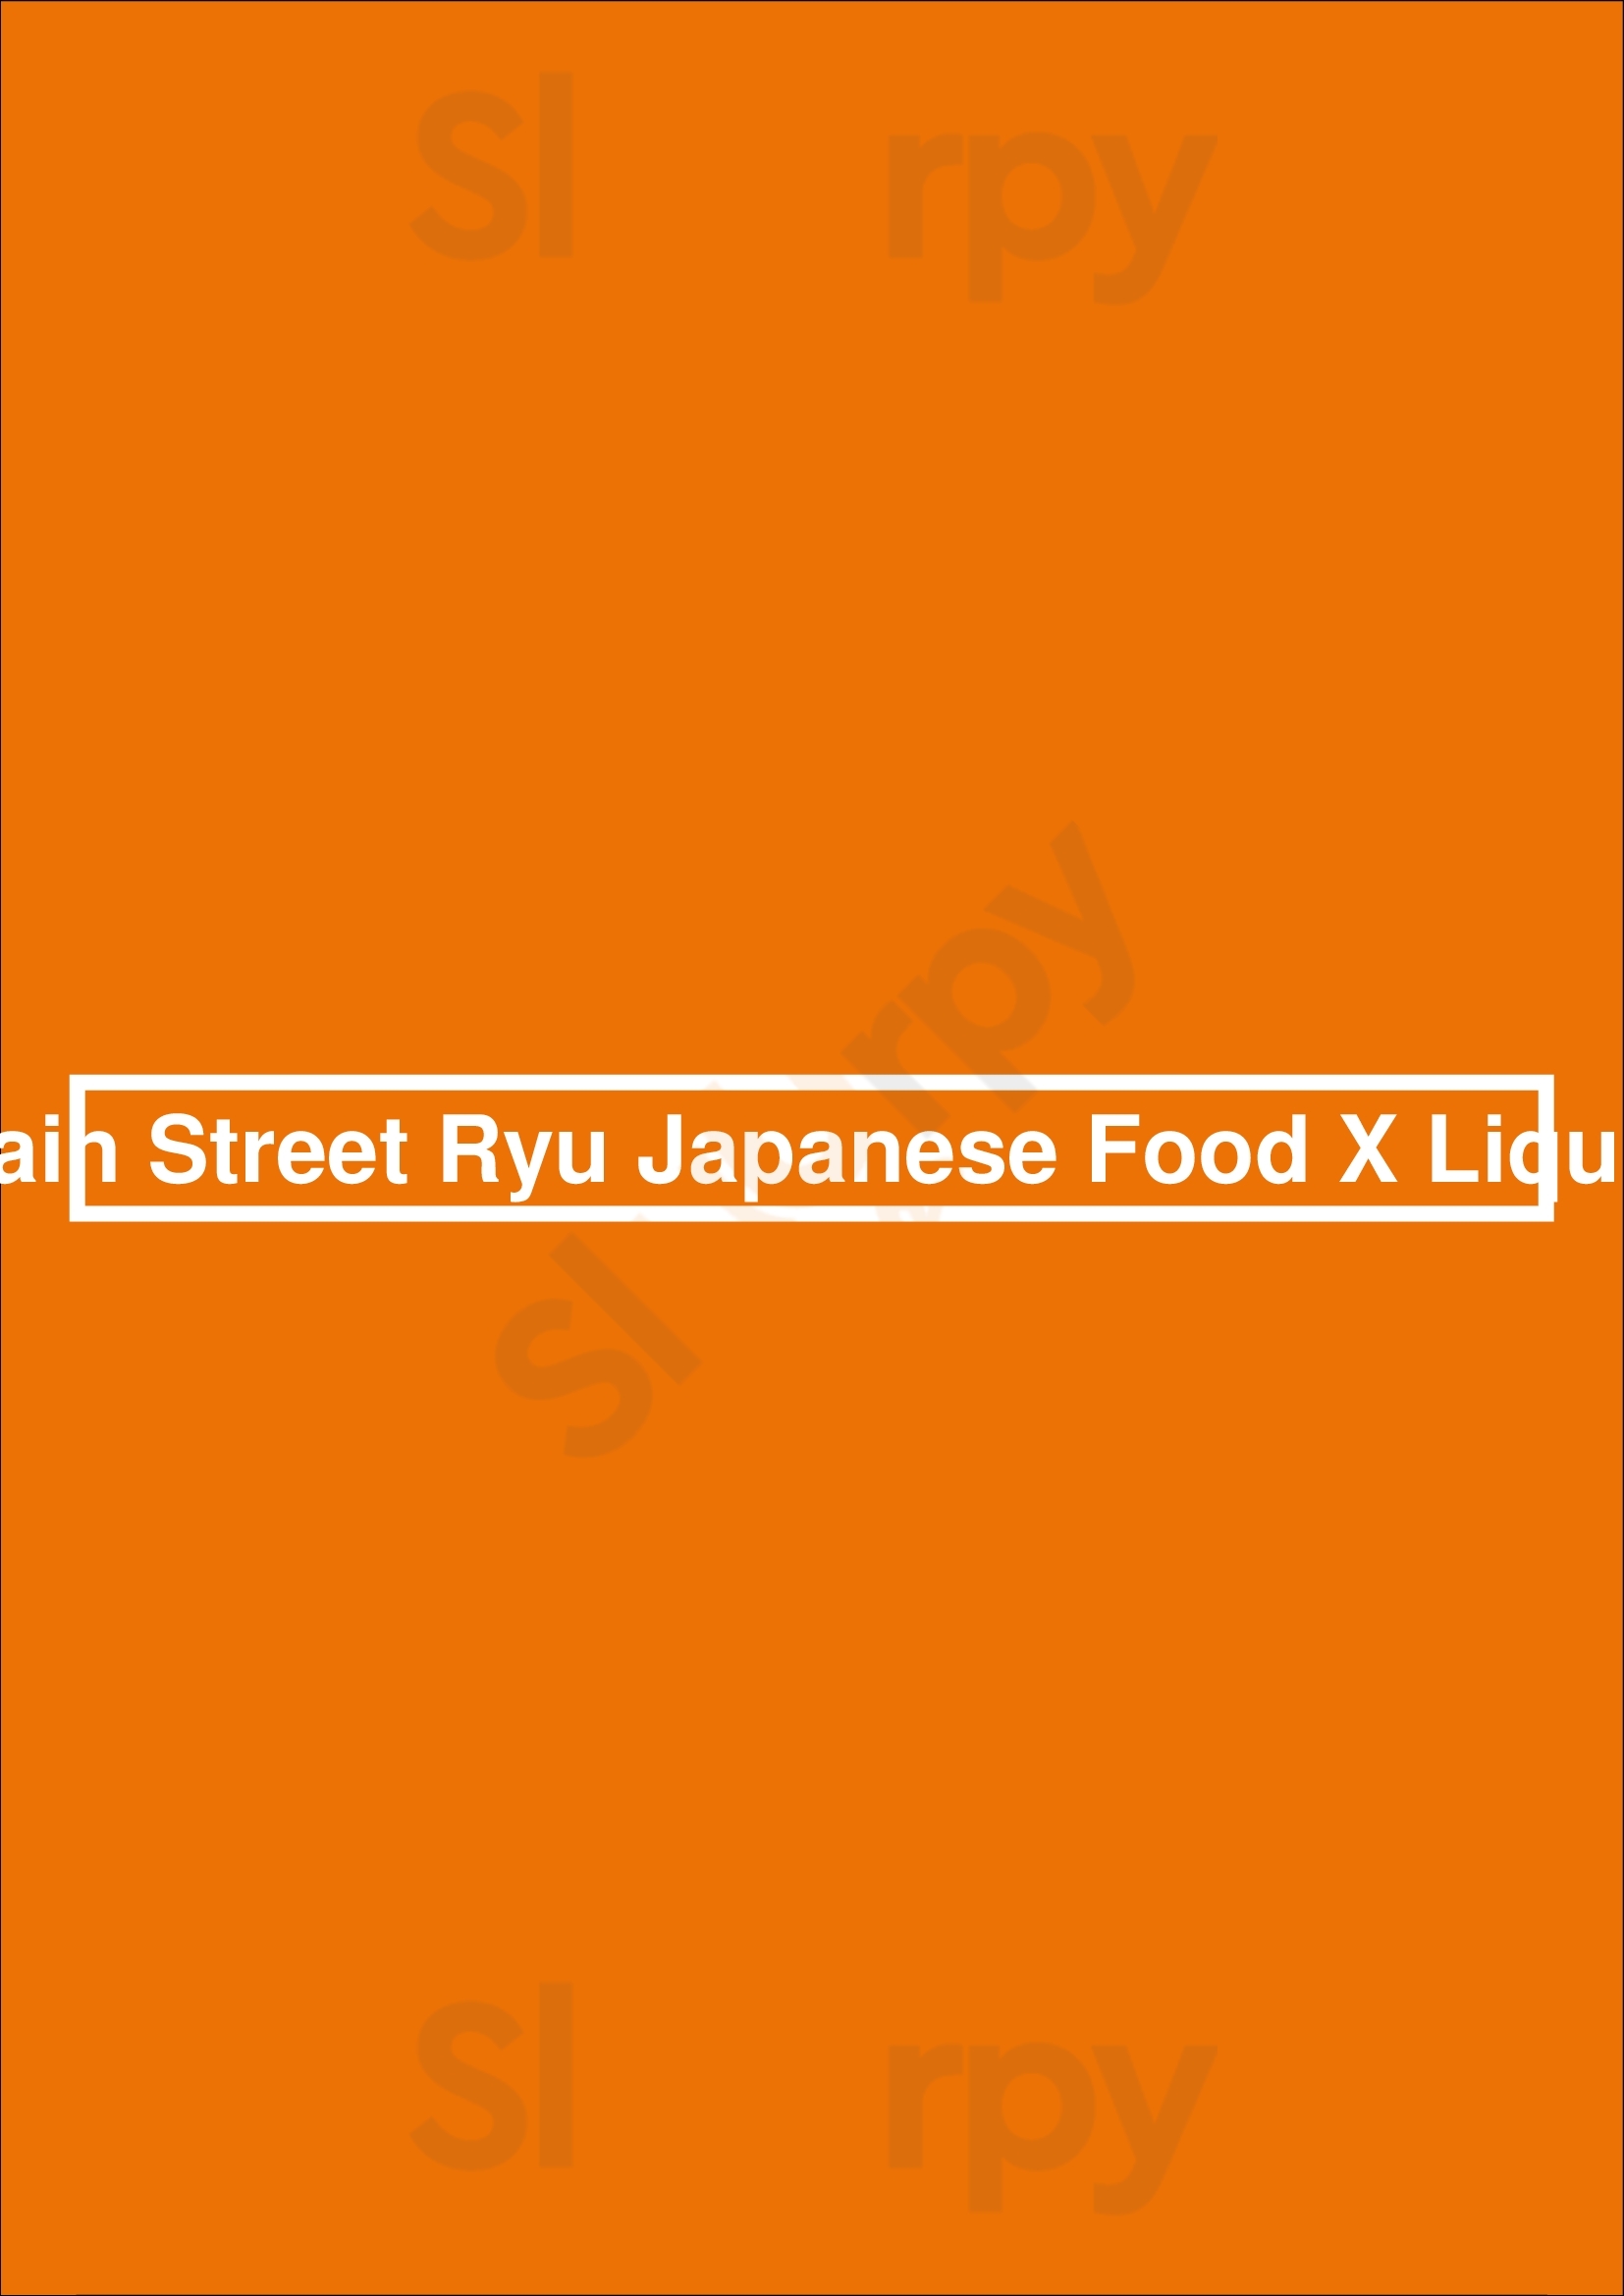 Main Street Ryu Japanese Food X Liquor Perth Menu - 1